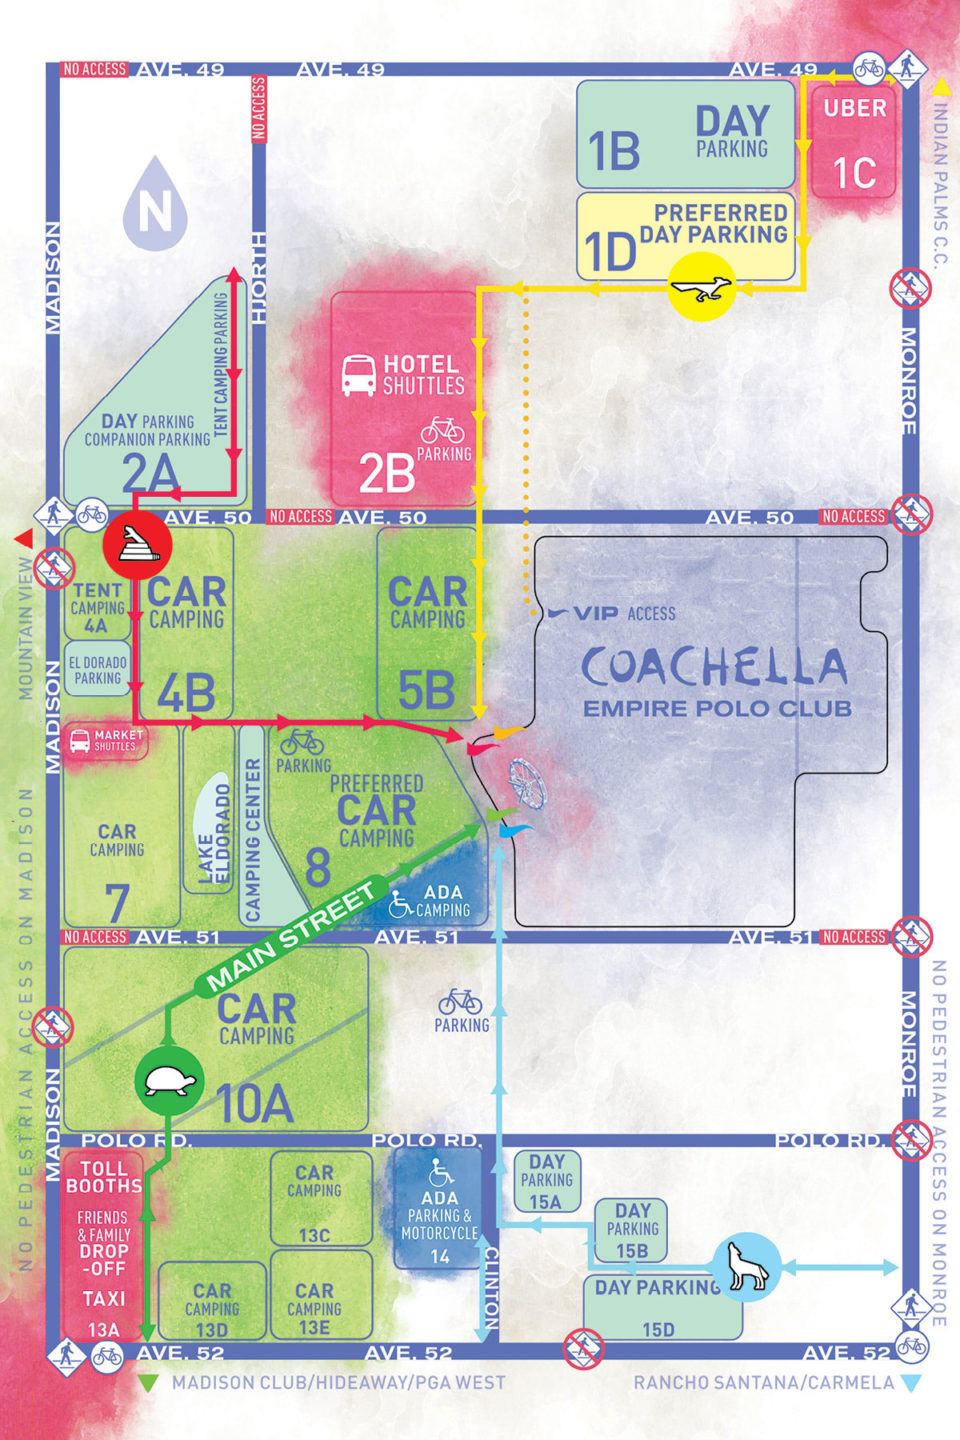 Parking Maps 2019 Coachella